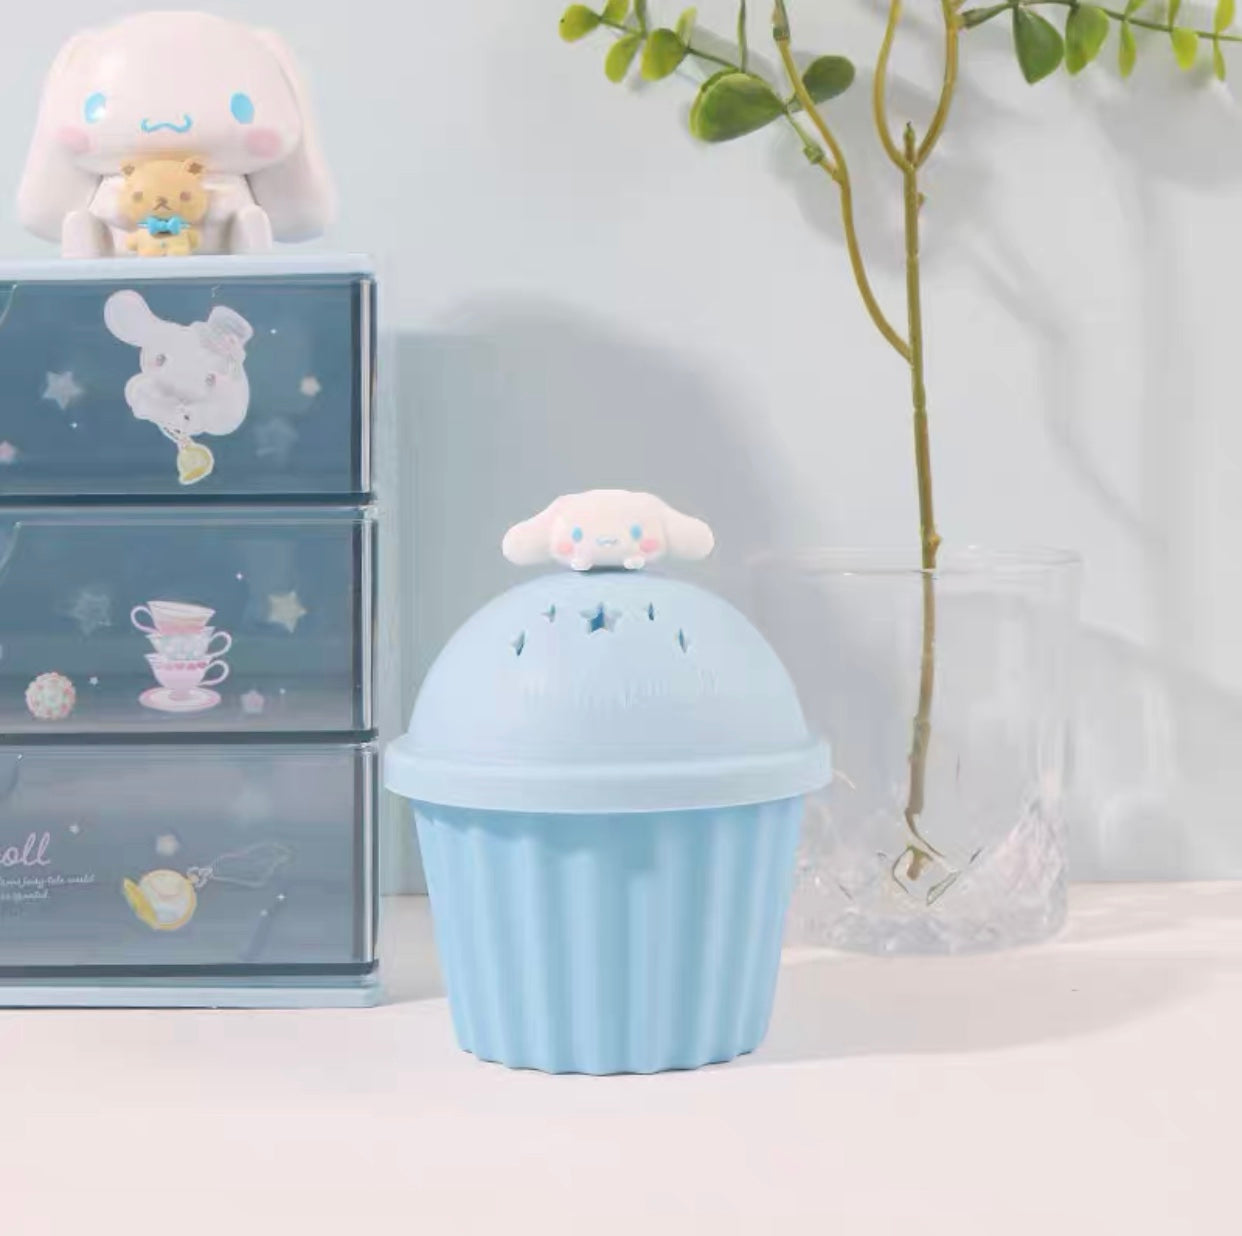 Sanrio Cupcake Air Freshener